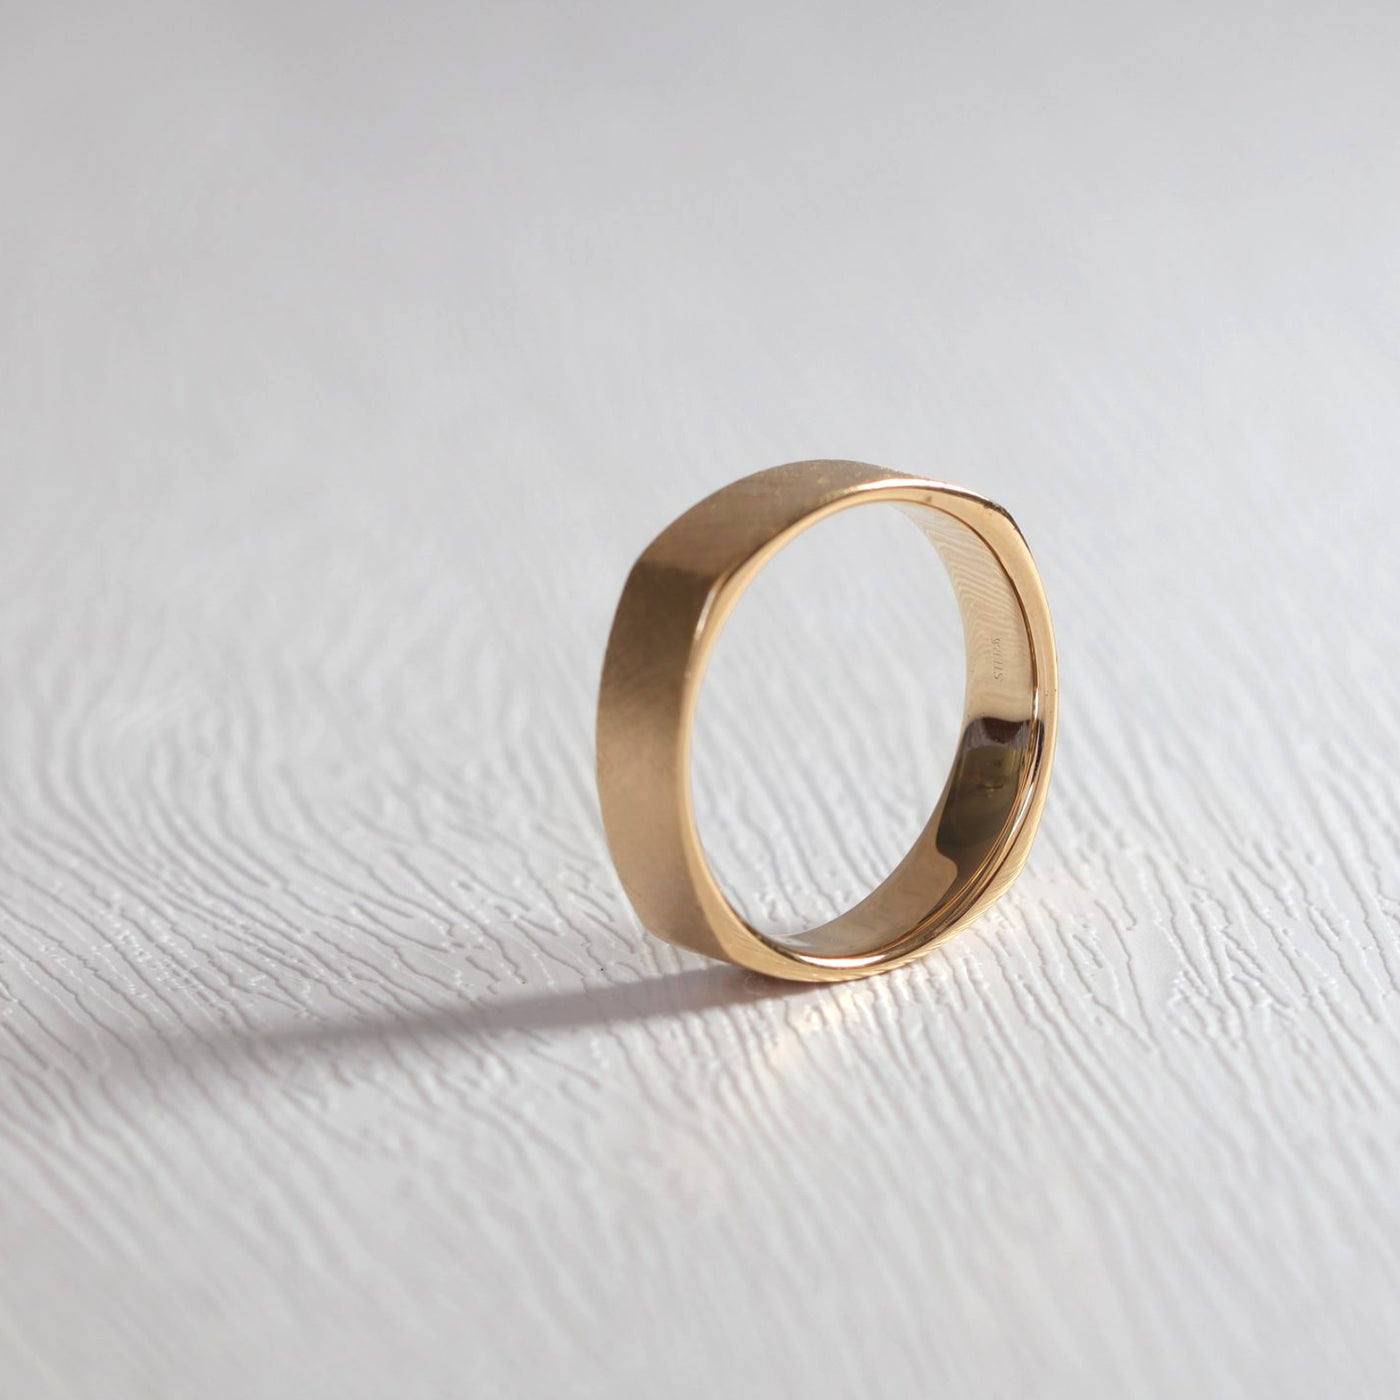 Square Wedding Ring in 14K gold